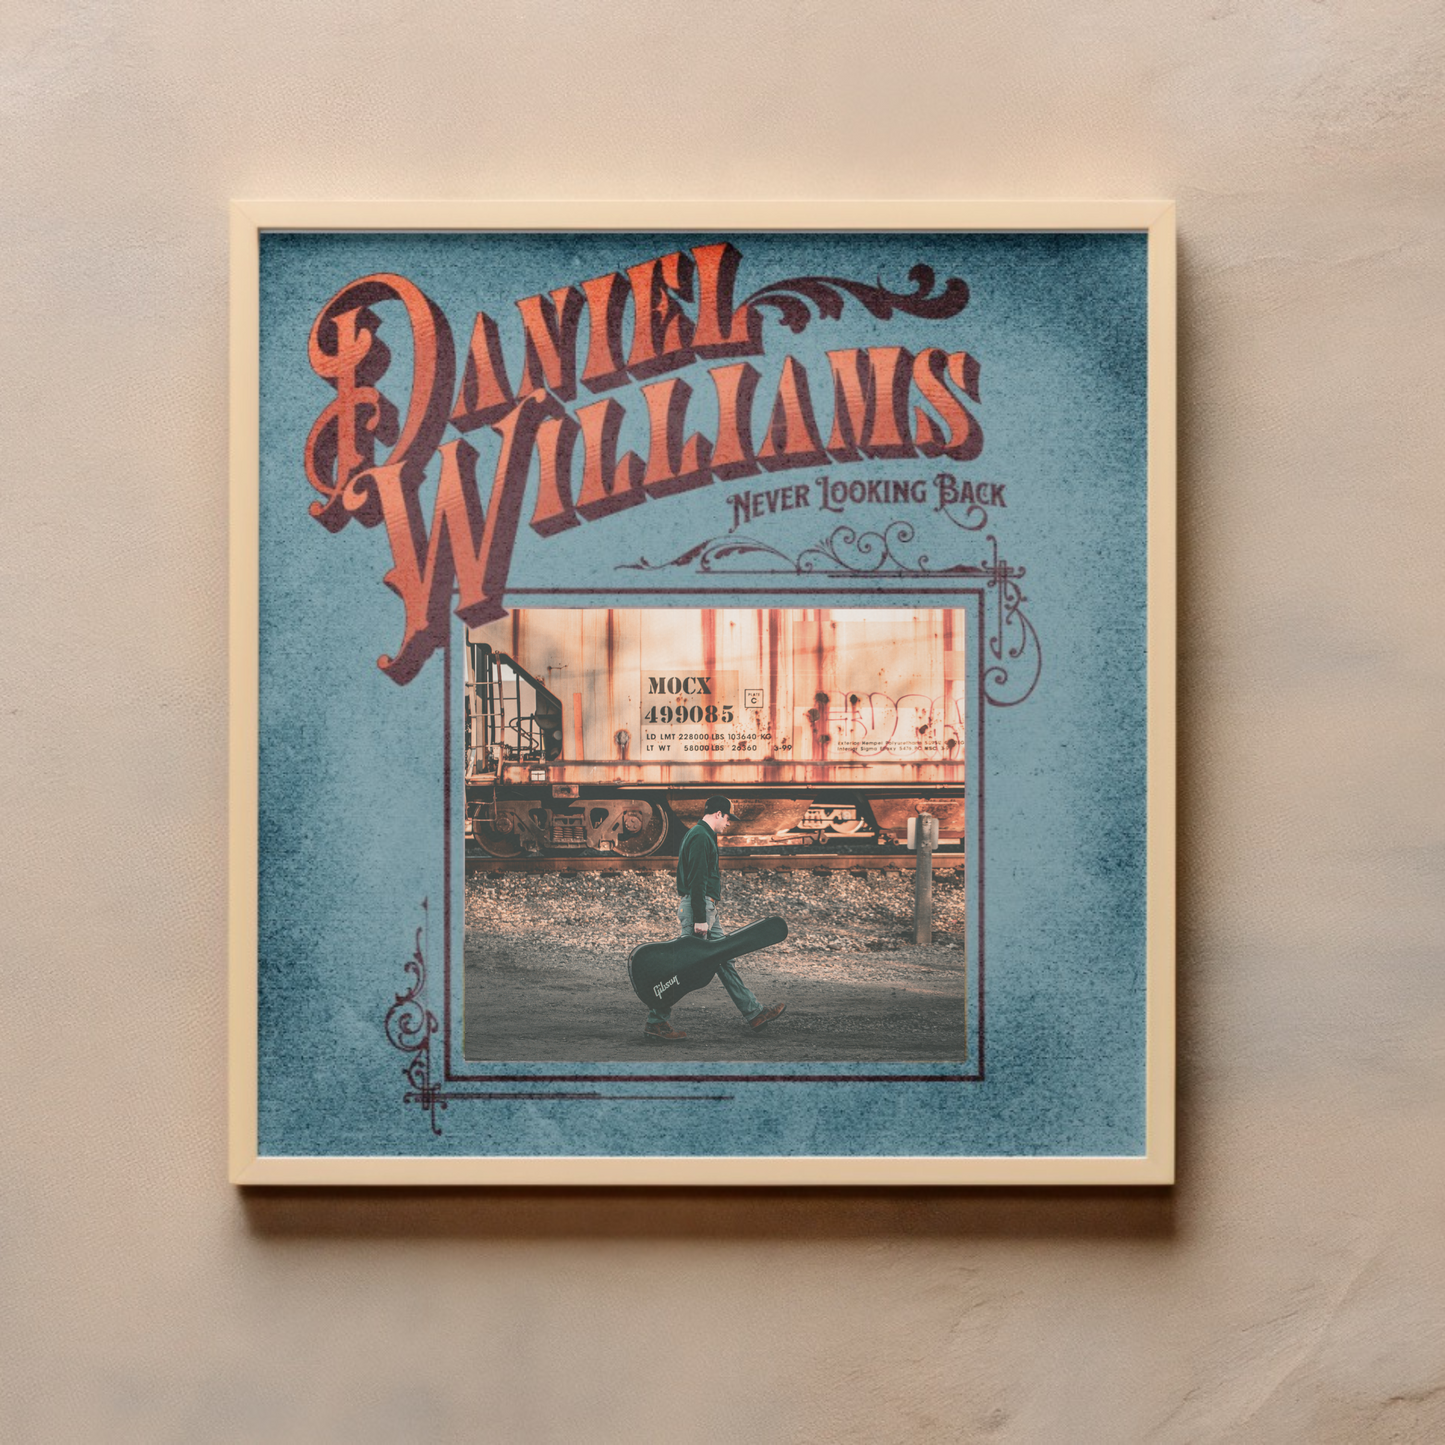 Download - Daniel Williams - "Never Looking Back"